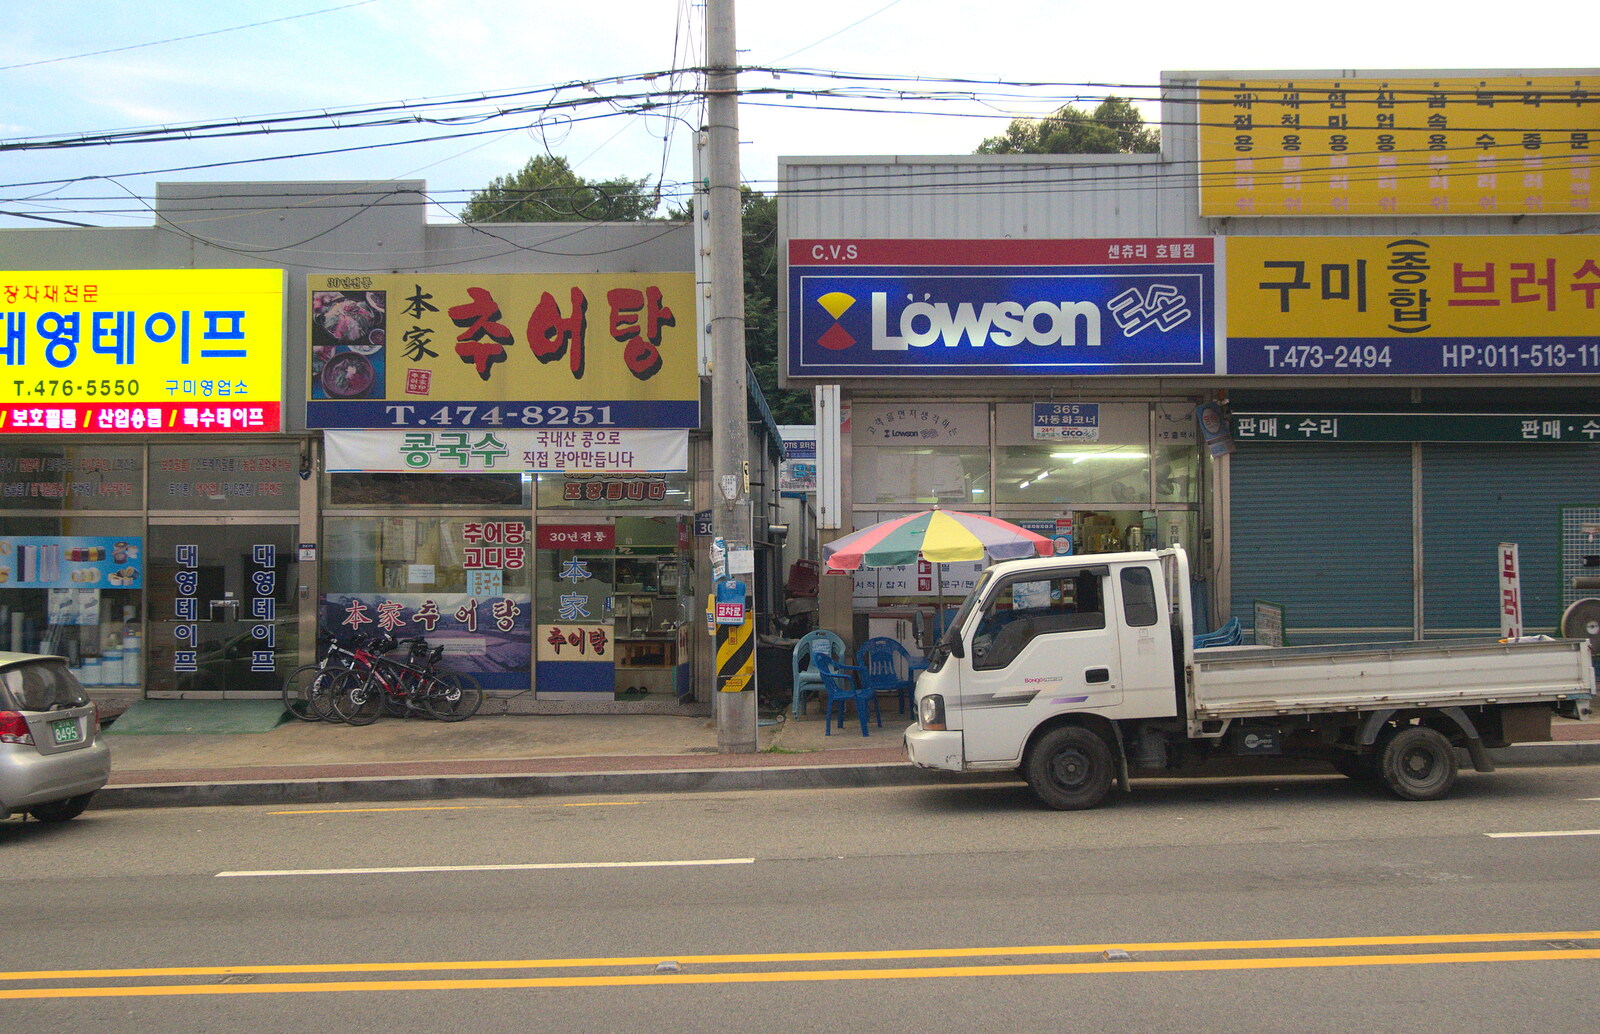 A row of harware shops from Working at Samsung, and Geumosan Mountain, Gumi, Gyeongsangbuk-do, Korea - 24th June 2012